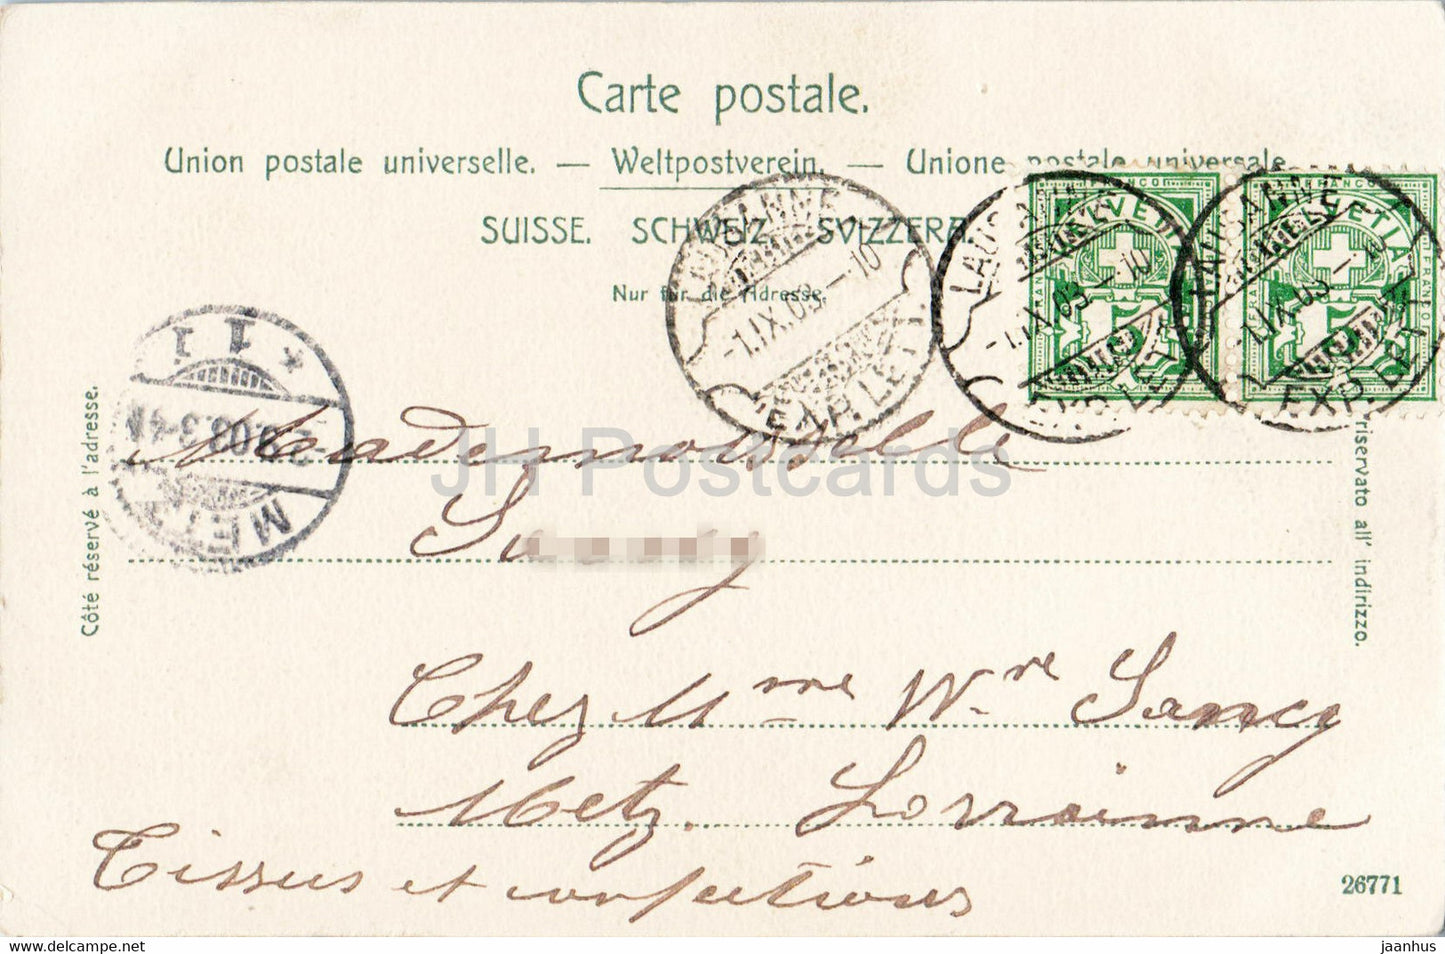 Ouchy - Tour Haldimann - carte postale ancienne - 1903 - Suisse - occasion